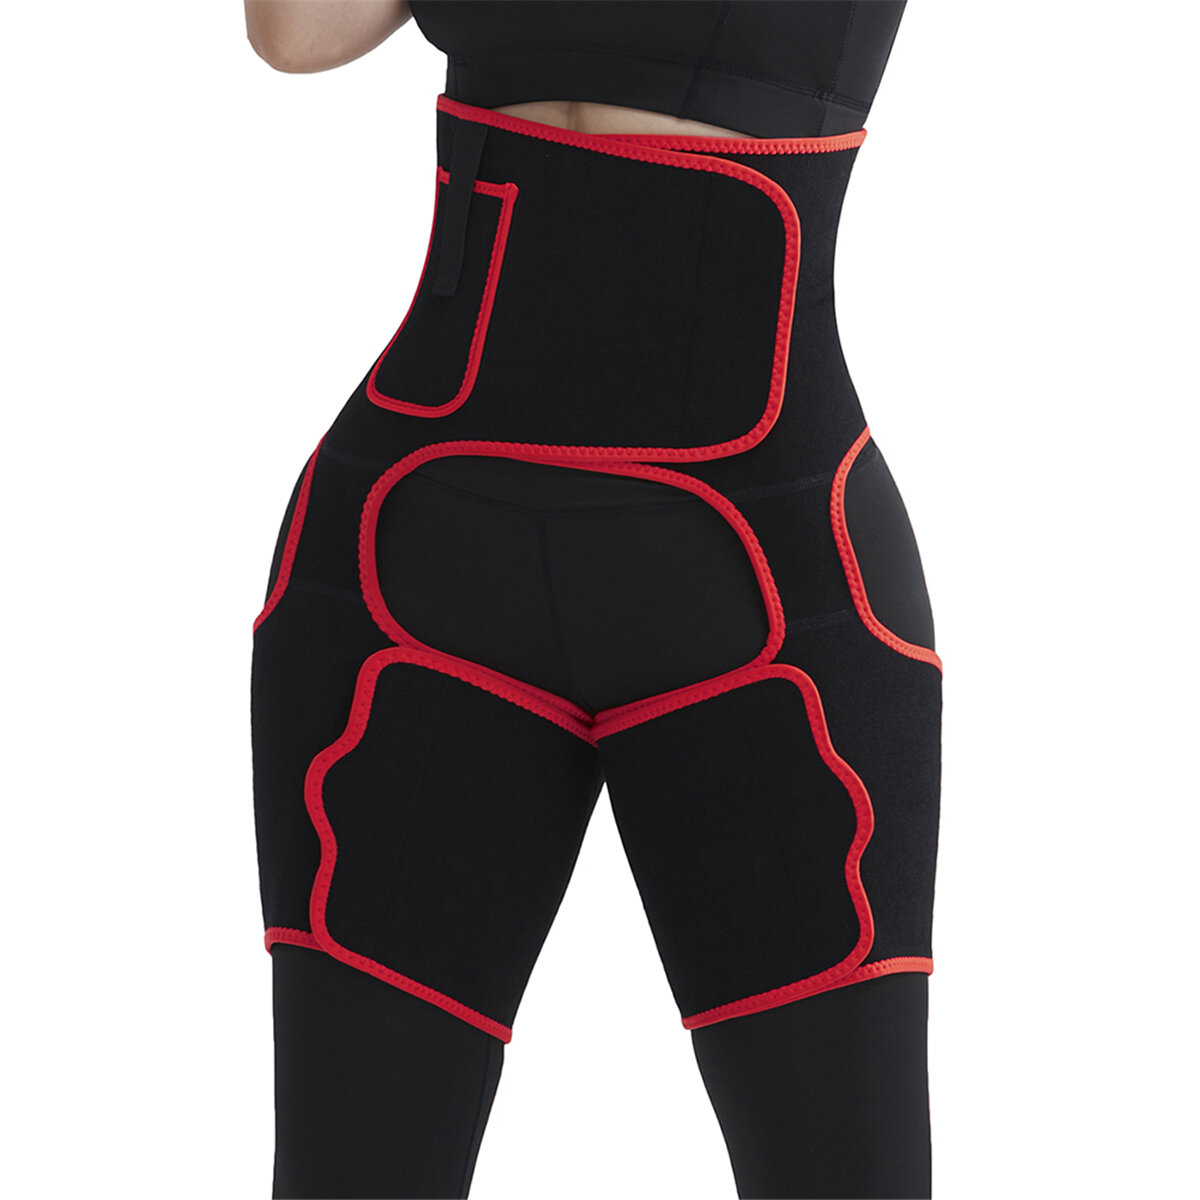 Image of Thigh Trimmer Belt Butt Lifter Body Shaper Leg Slimmer Sweat Trainer Home Gym Sport Fitness